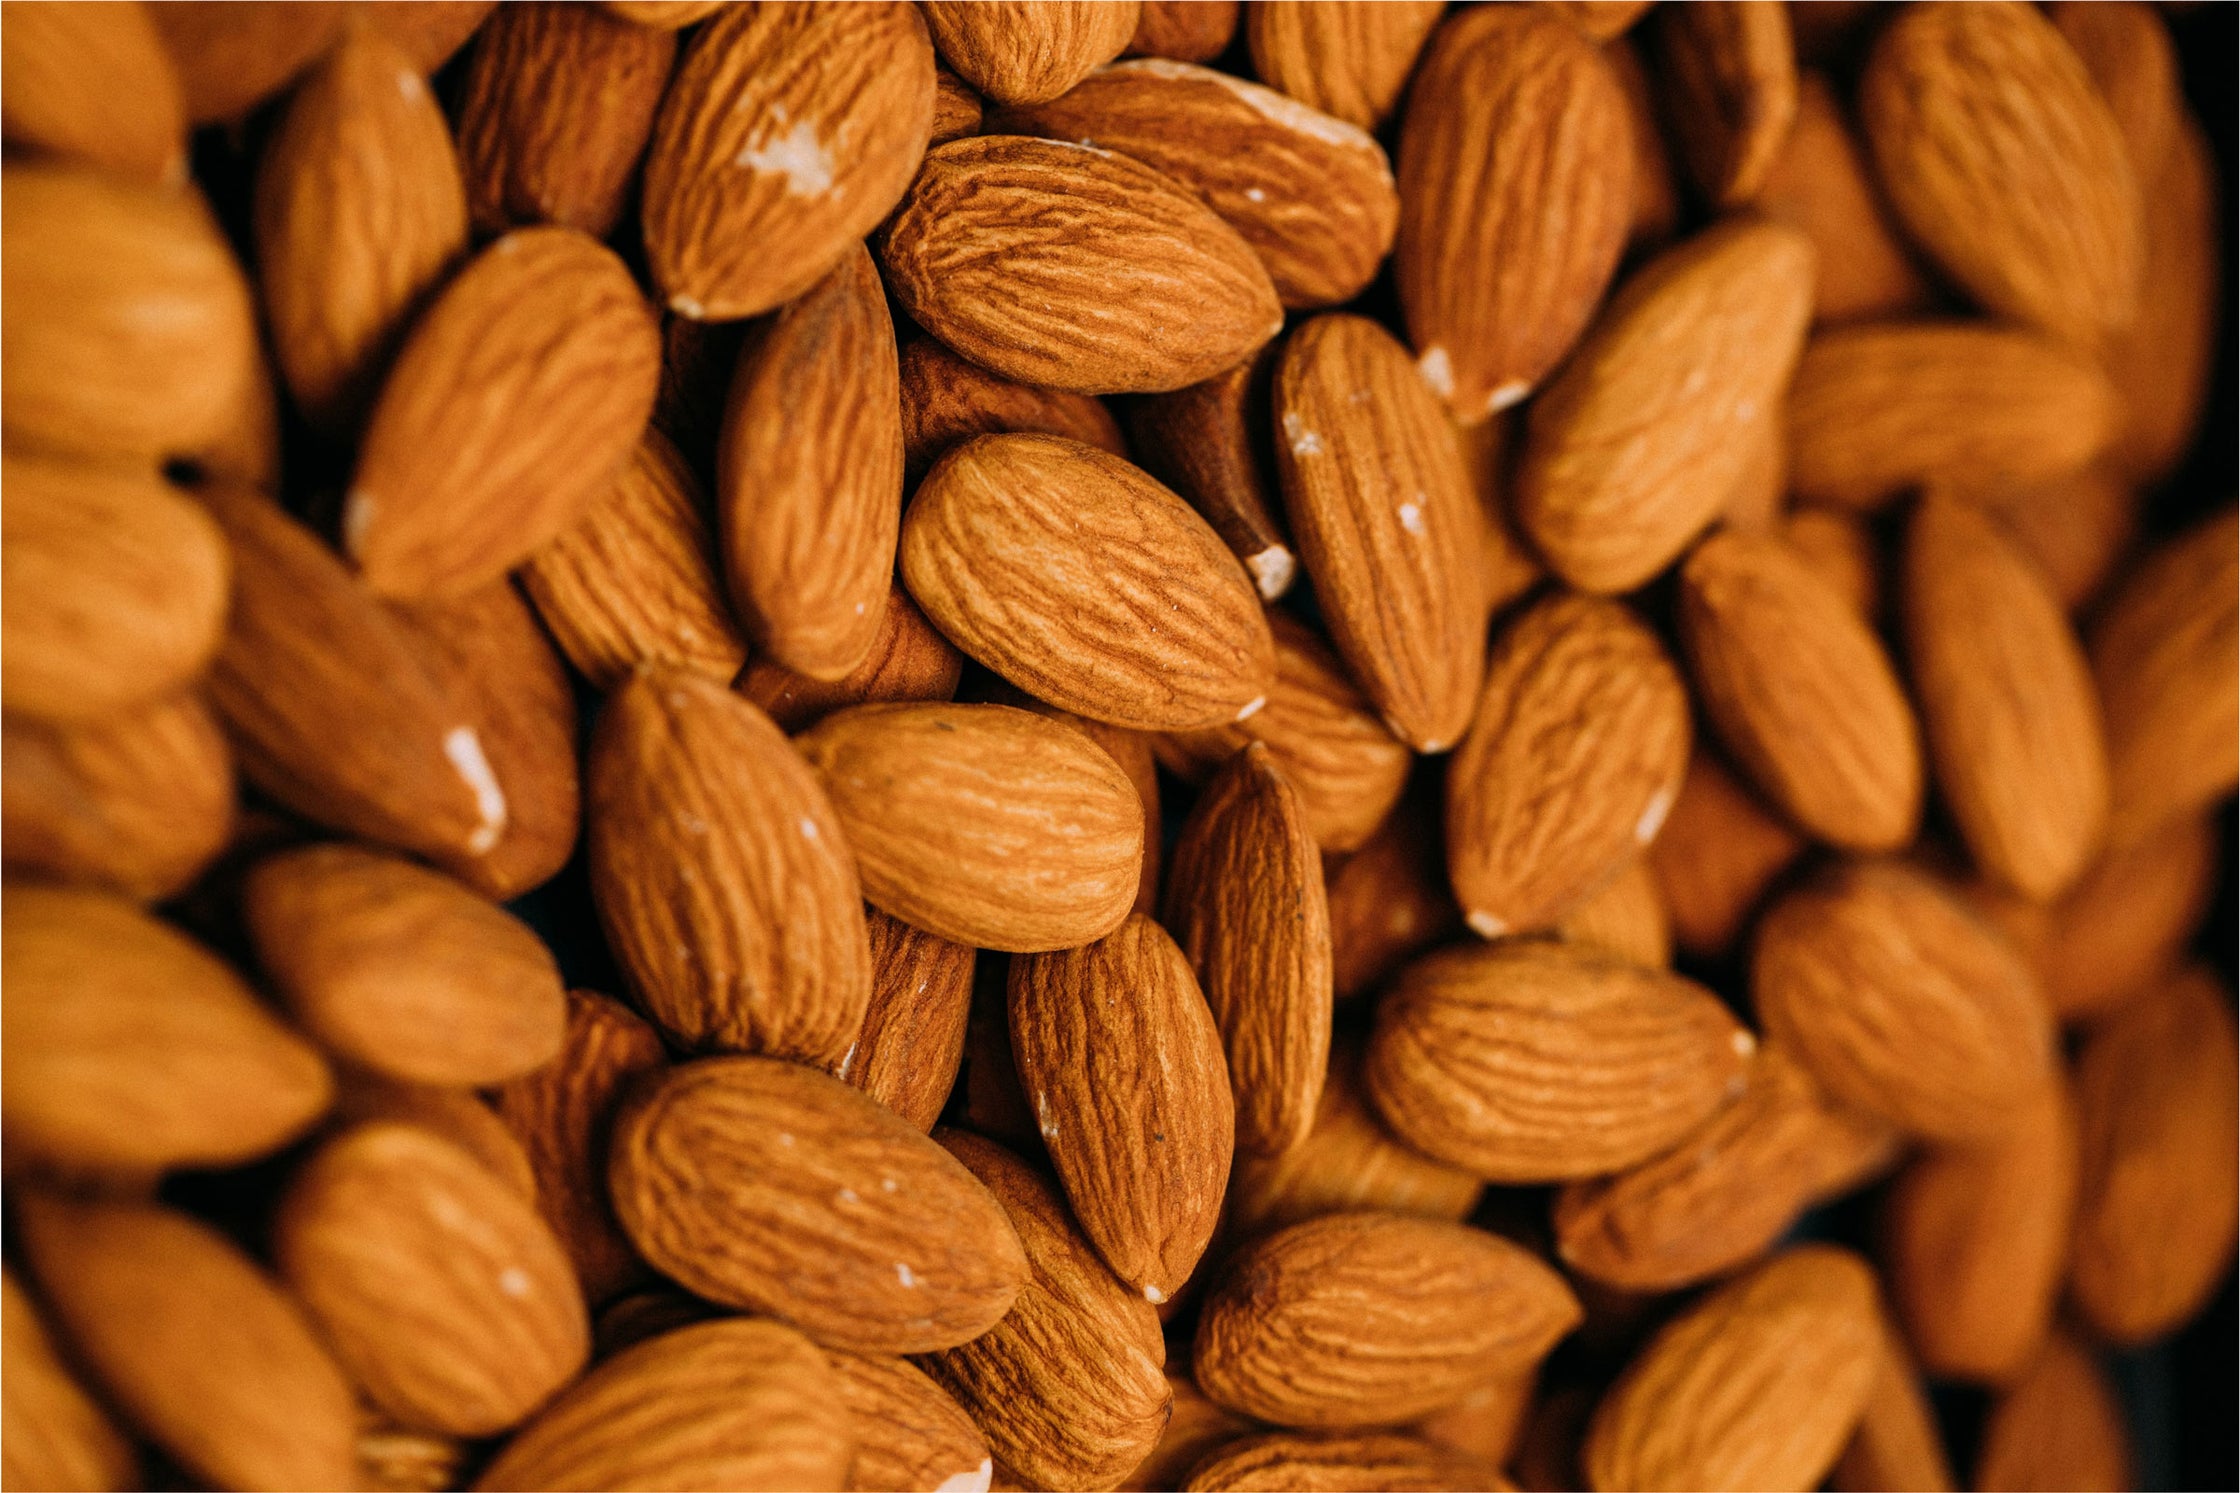 Close up of fresh almonds